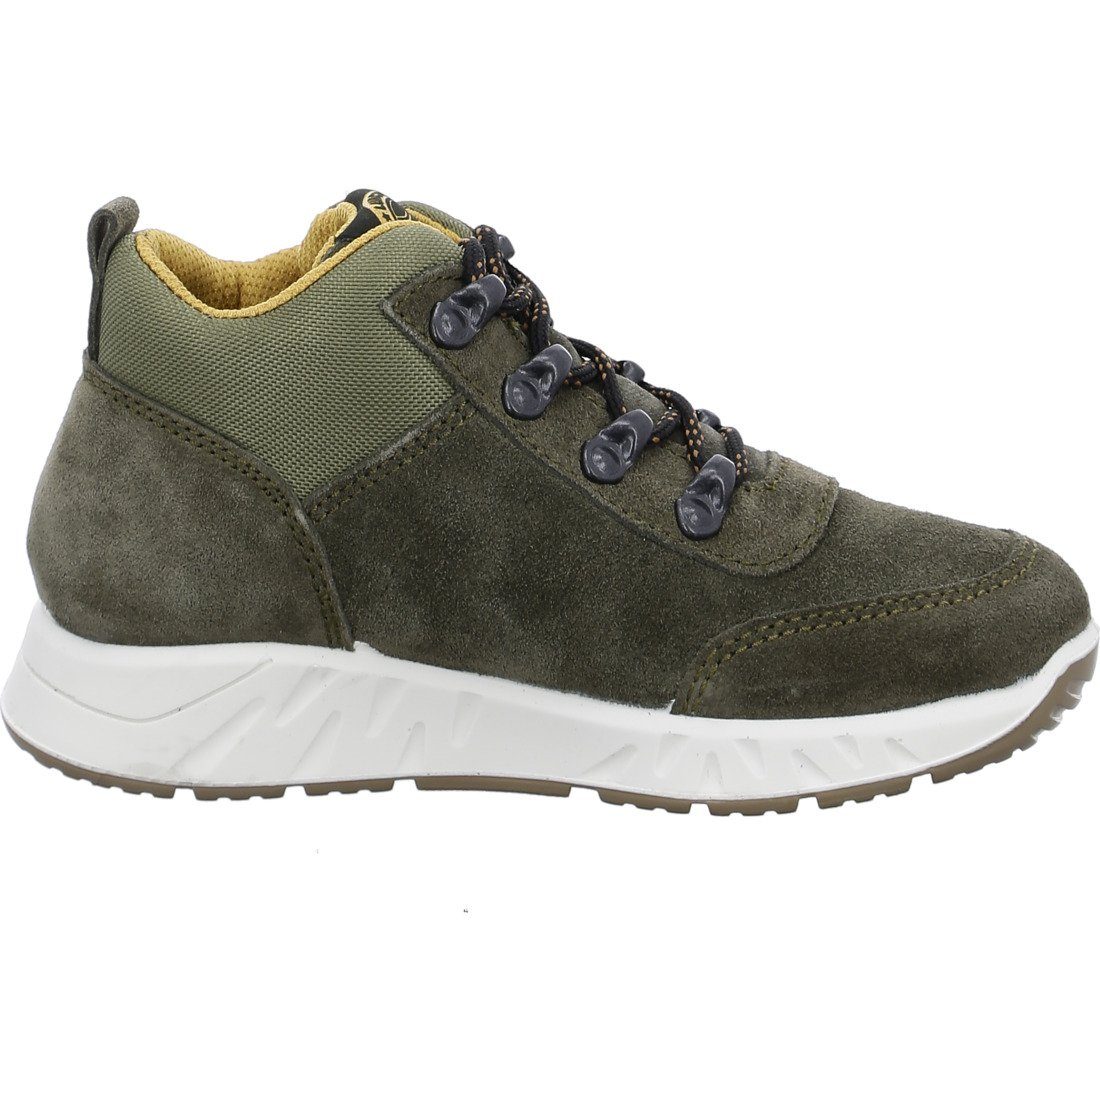 ChonTex Lurchi Lurchi - Schuhe, Sneaker grün 046443 Sneaker Rauleder